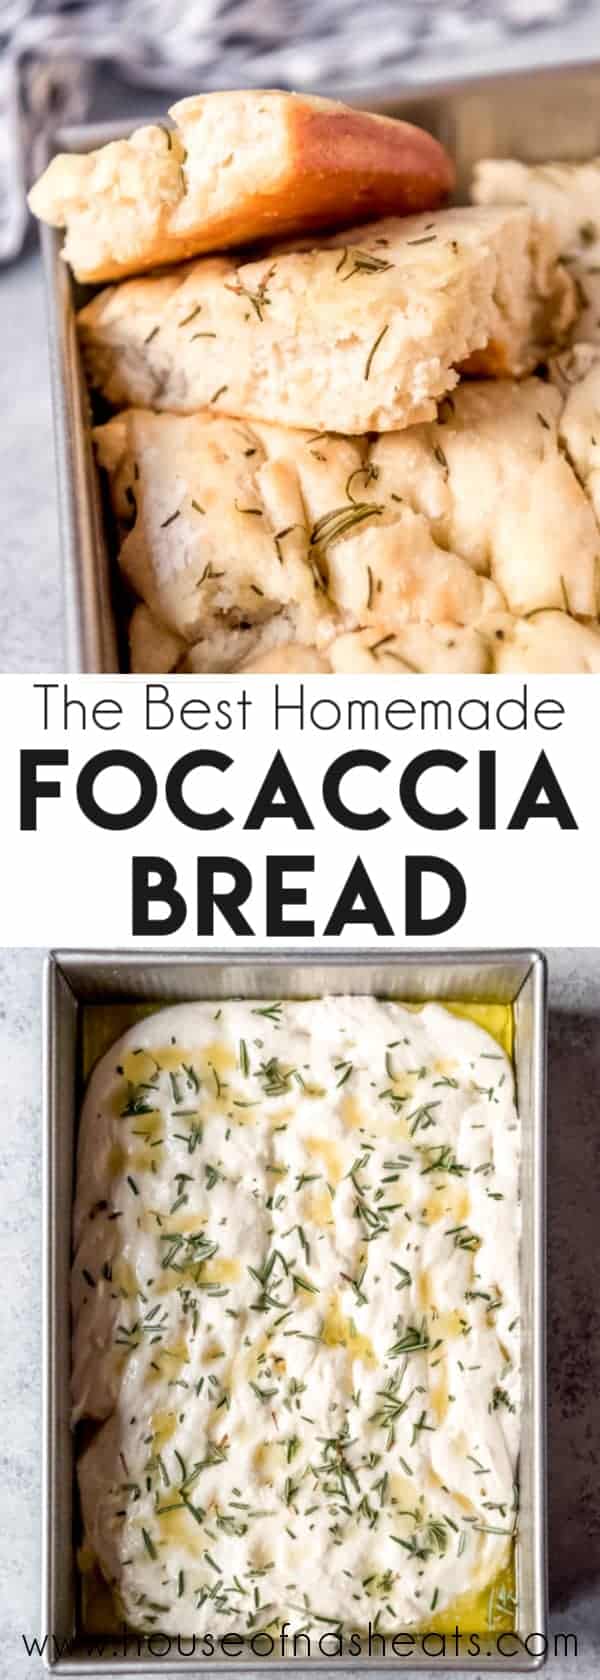 The best homemade focaccia bread